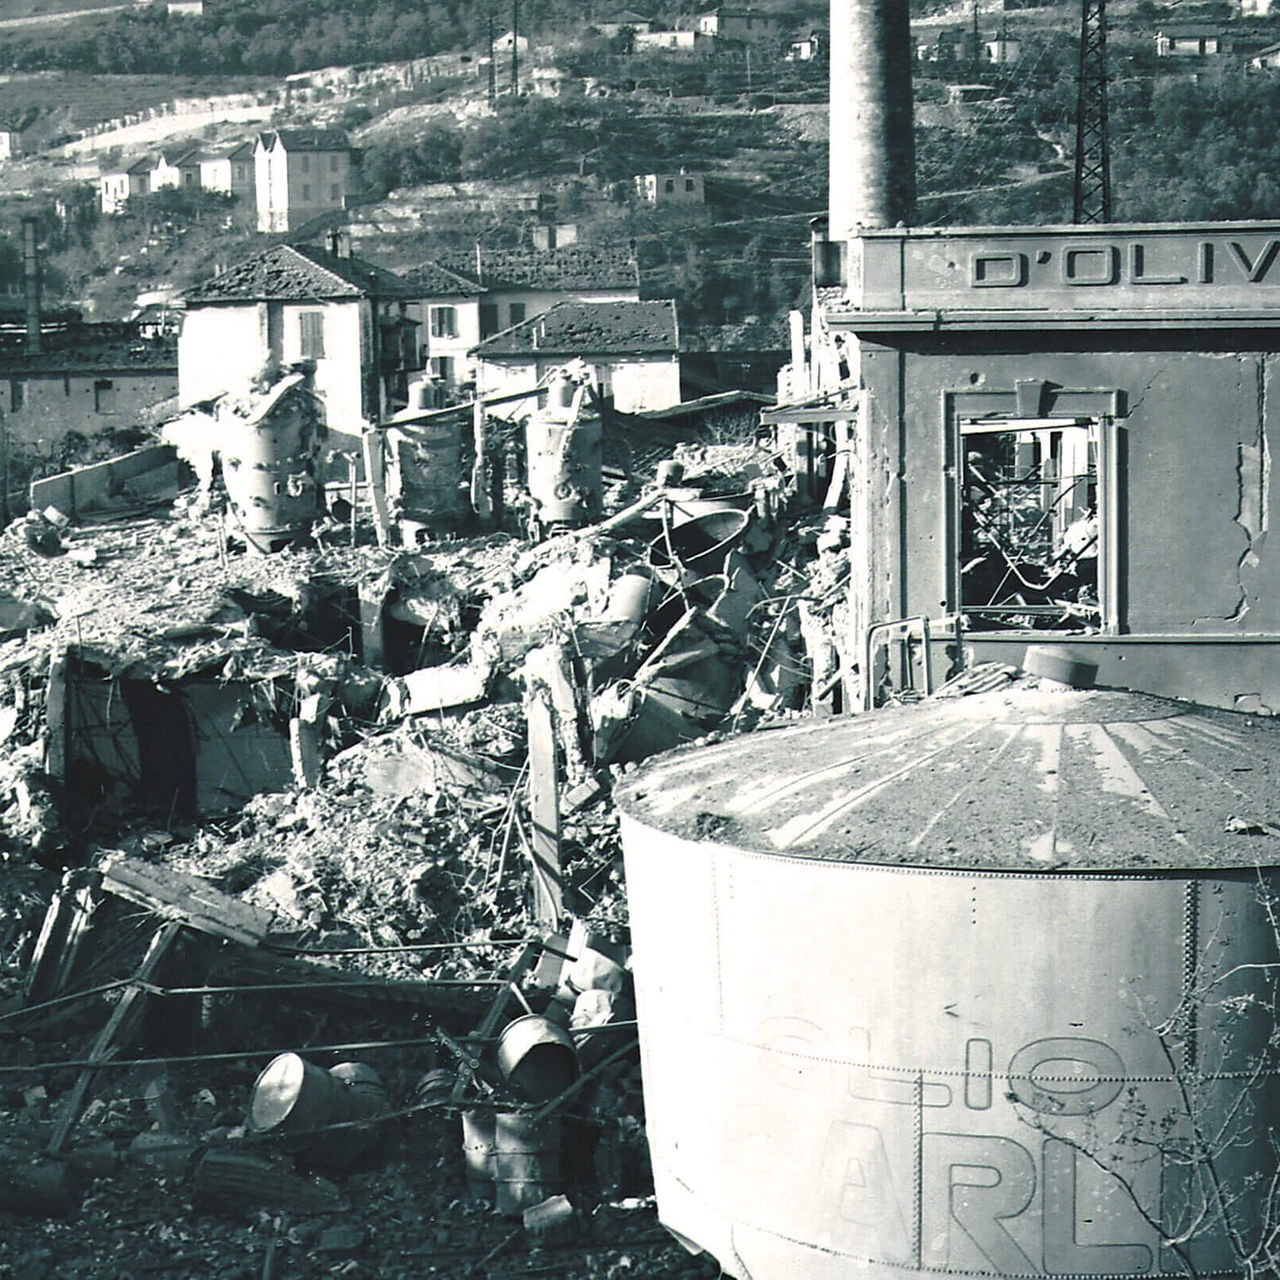 Bombing Olio Carli headquarters 